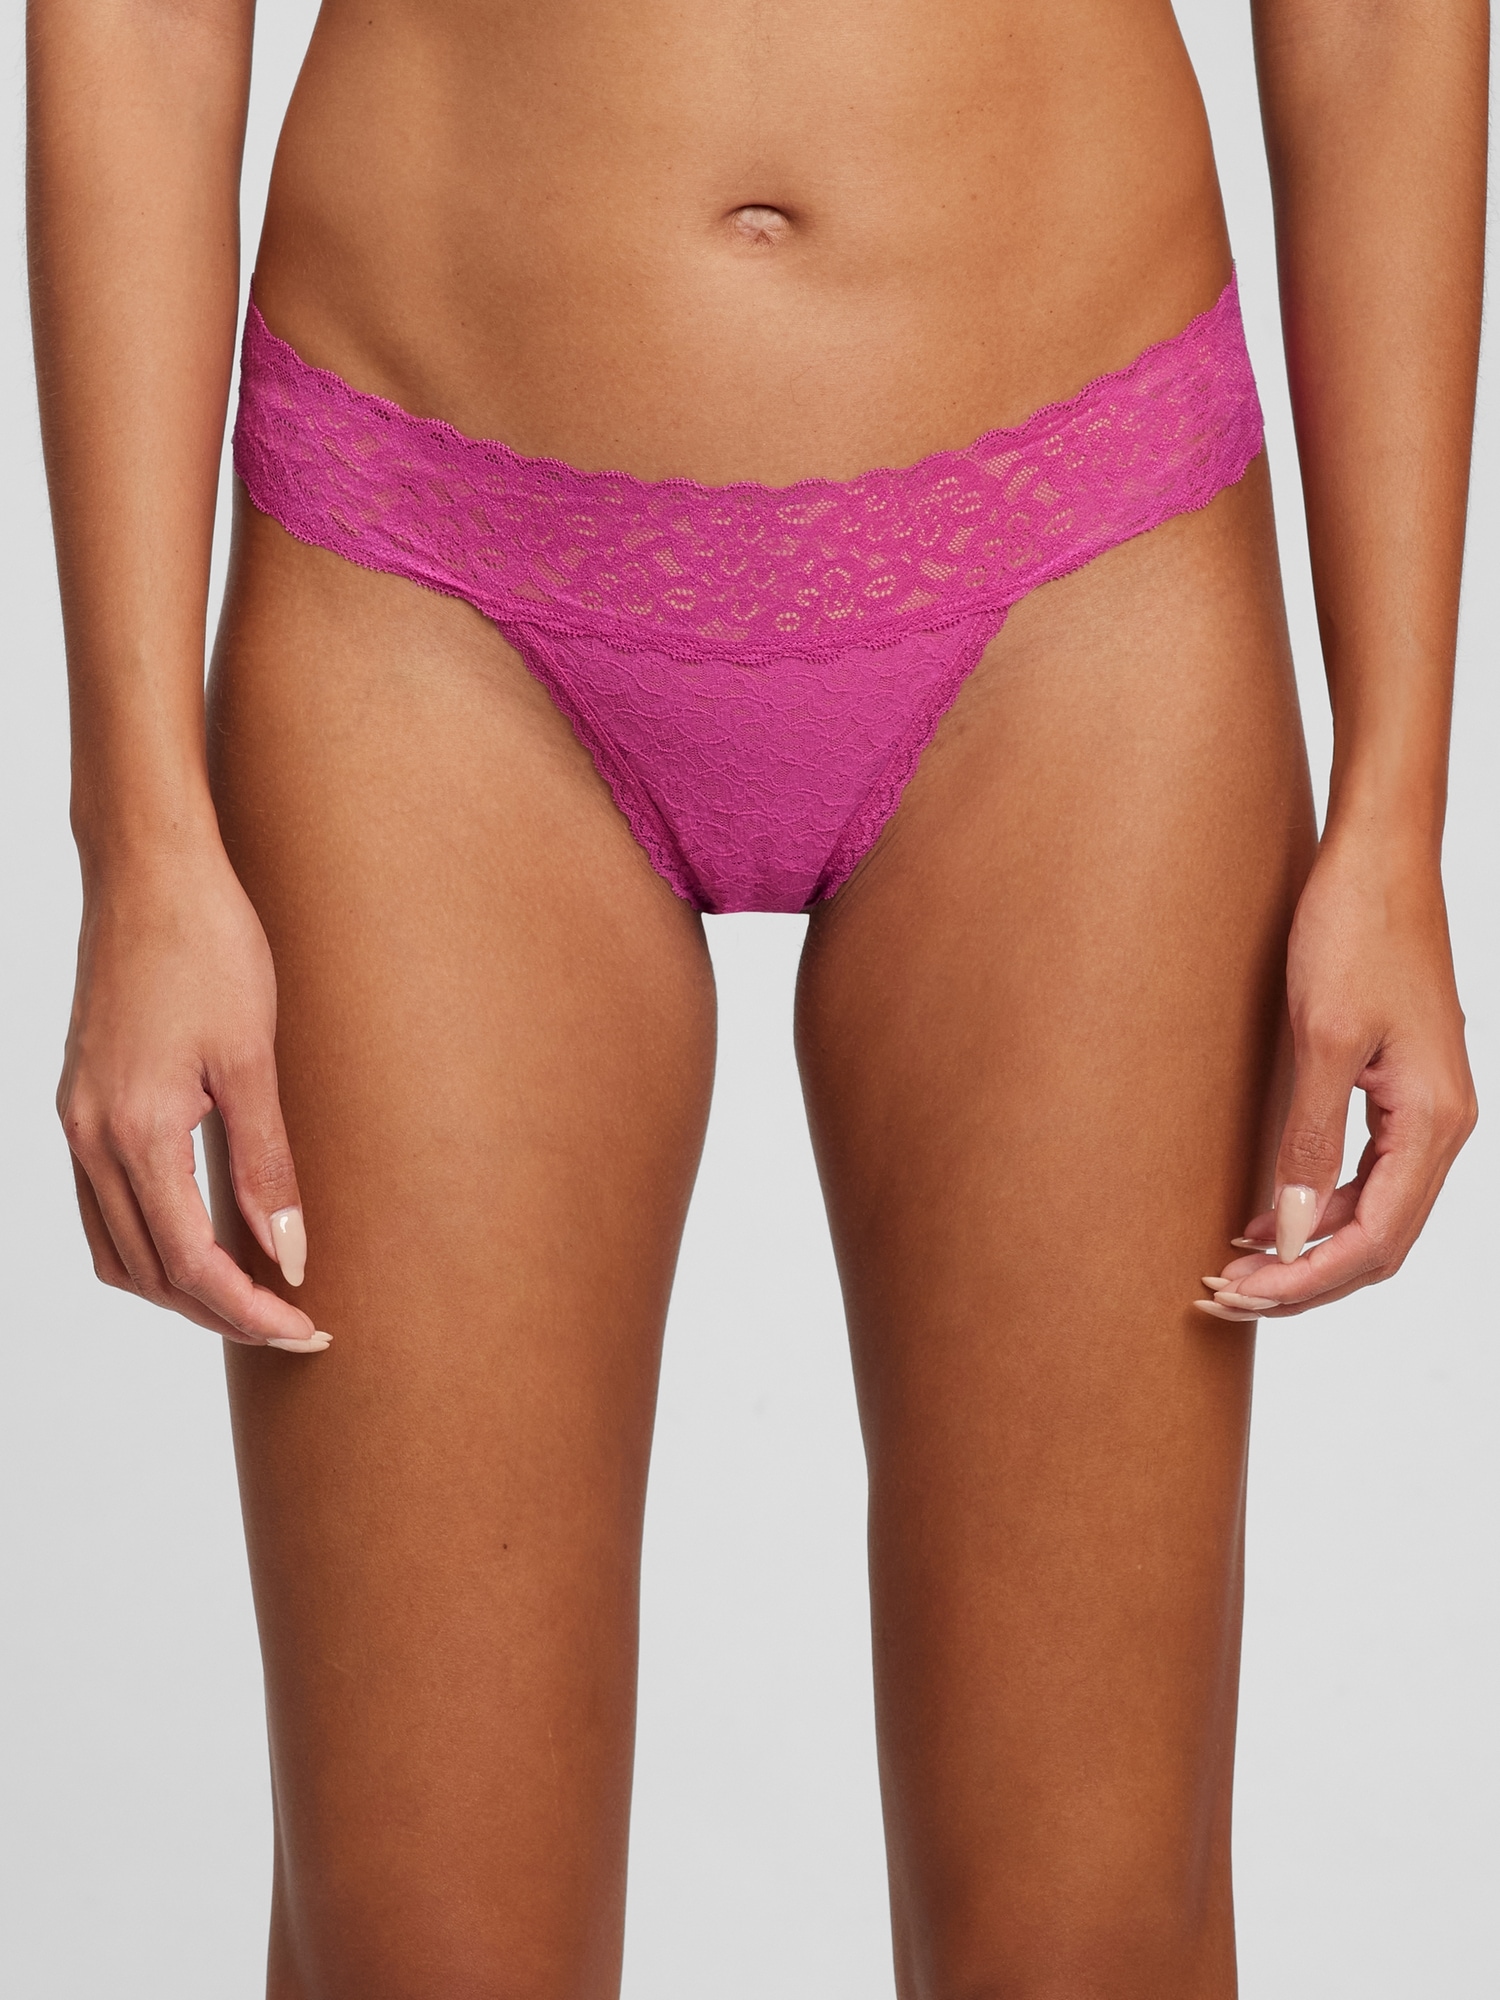 Mendove Women's Sexy Transparent Lace Lingerie Panties T-Back Thongs Size M  Pink : : Clothing, Shoes & Accessories